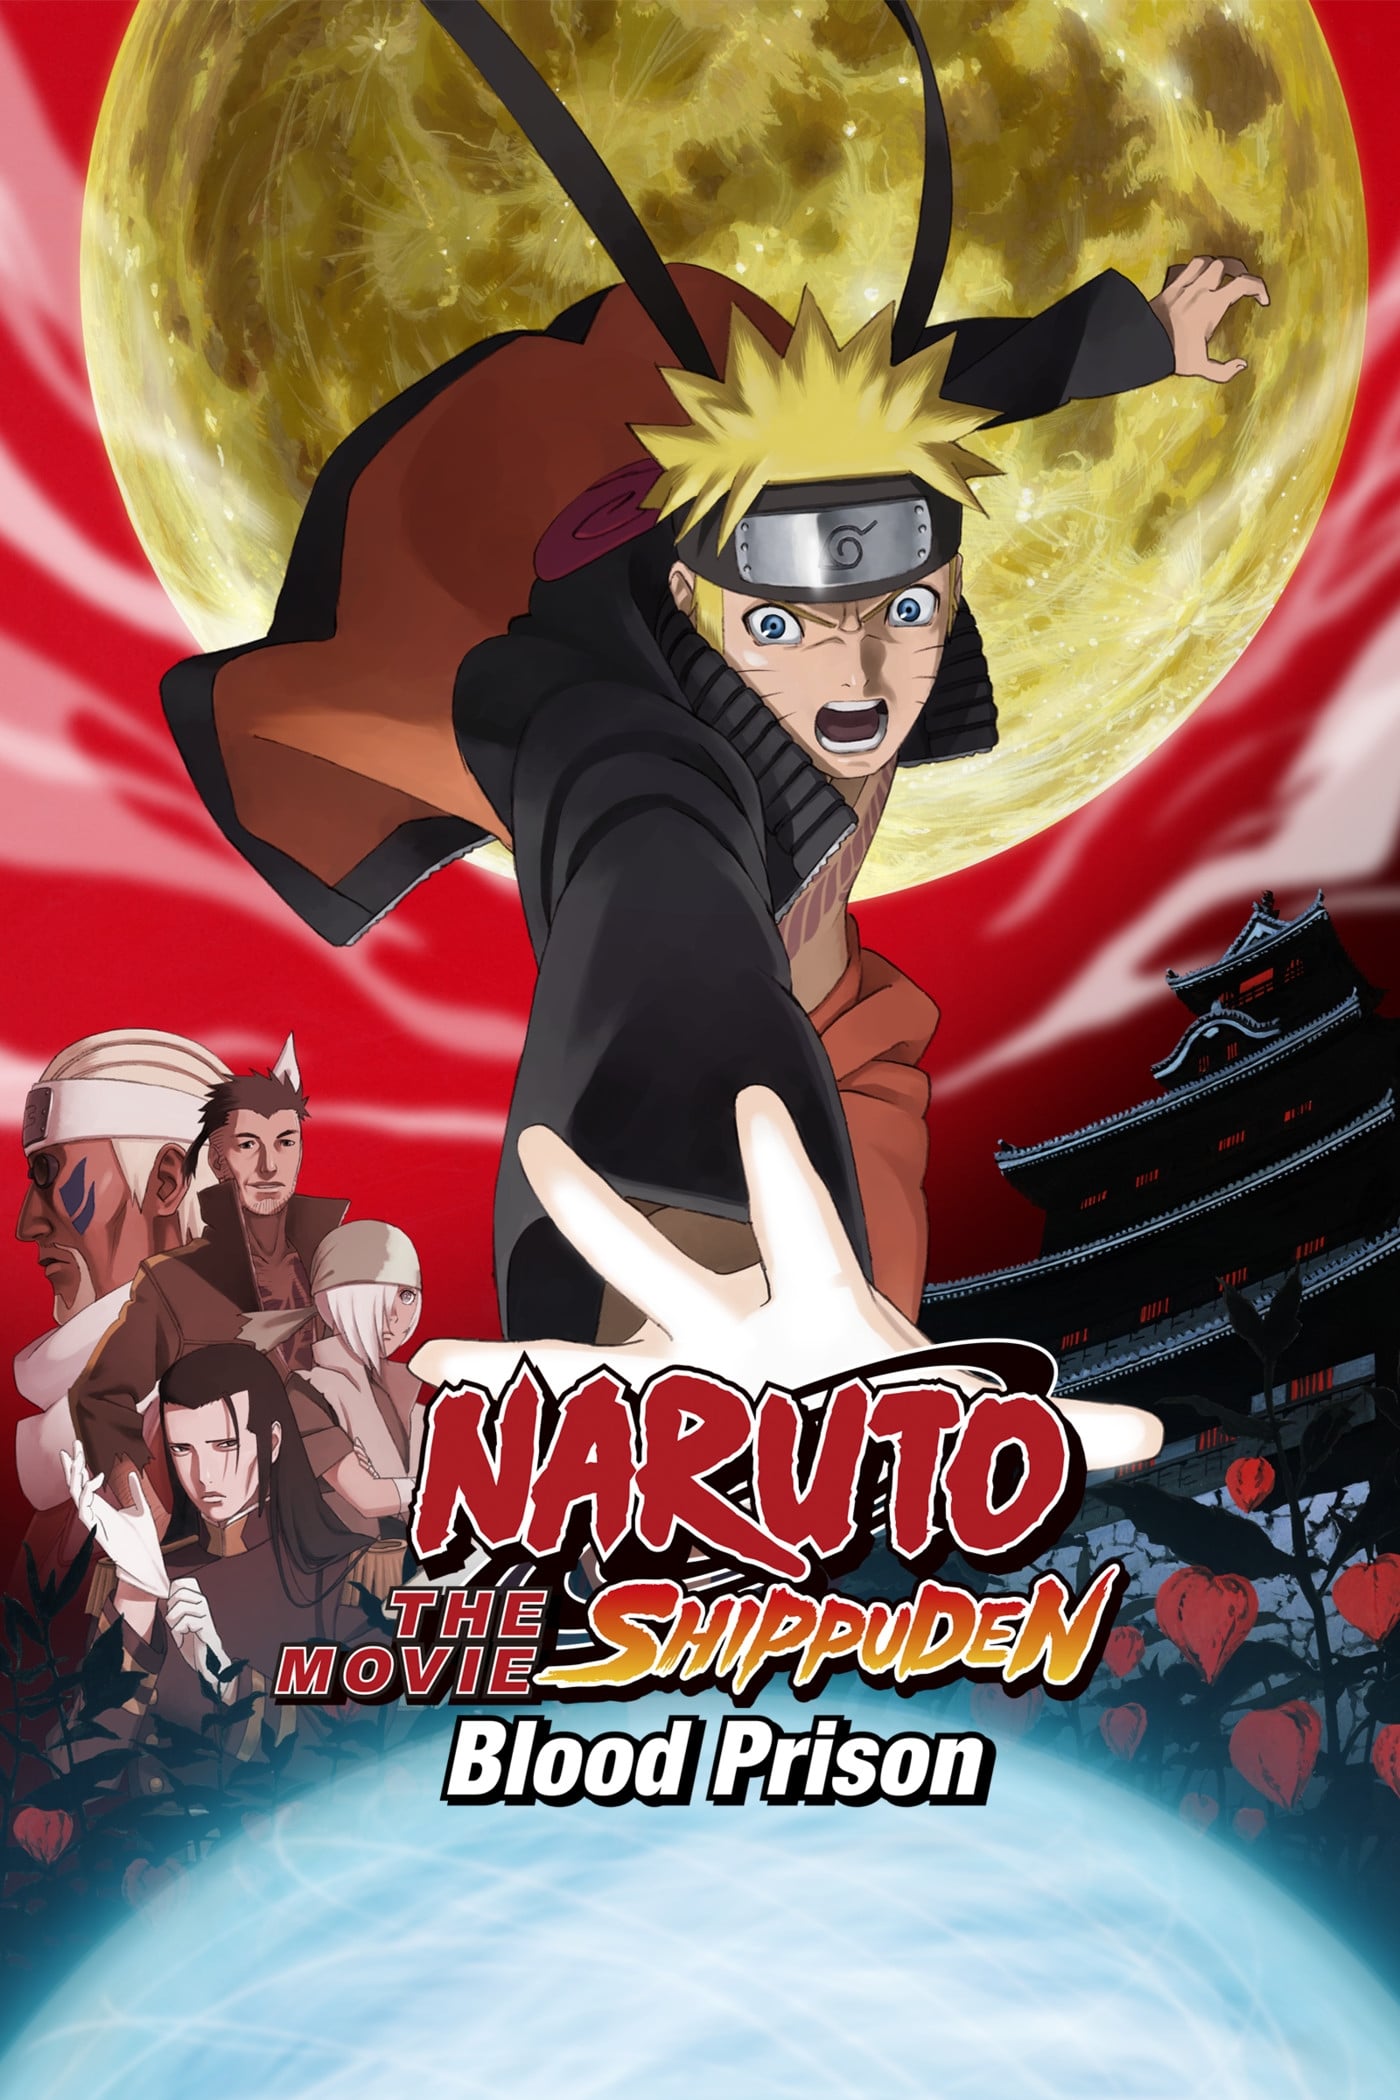 Naruto Shippuden : La Prison de Sang